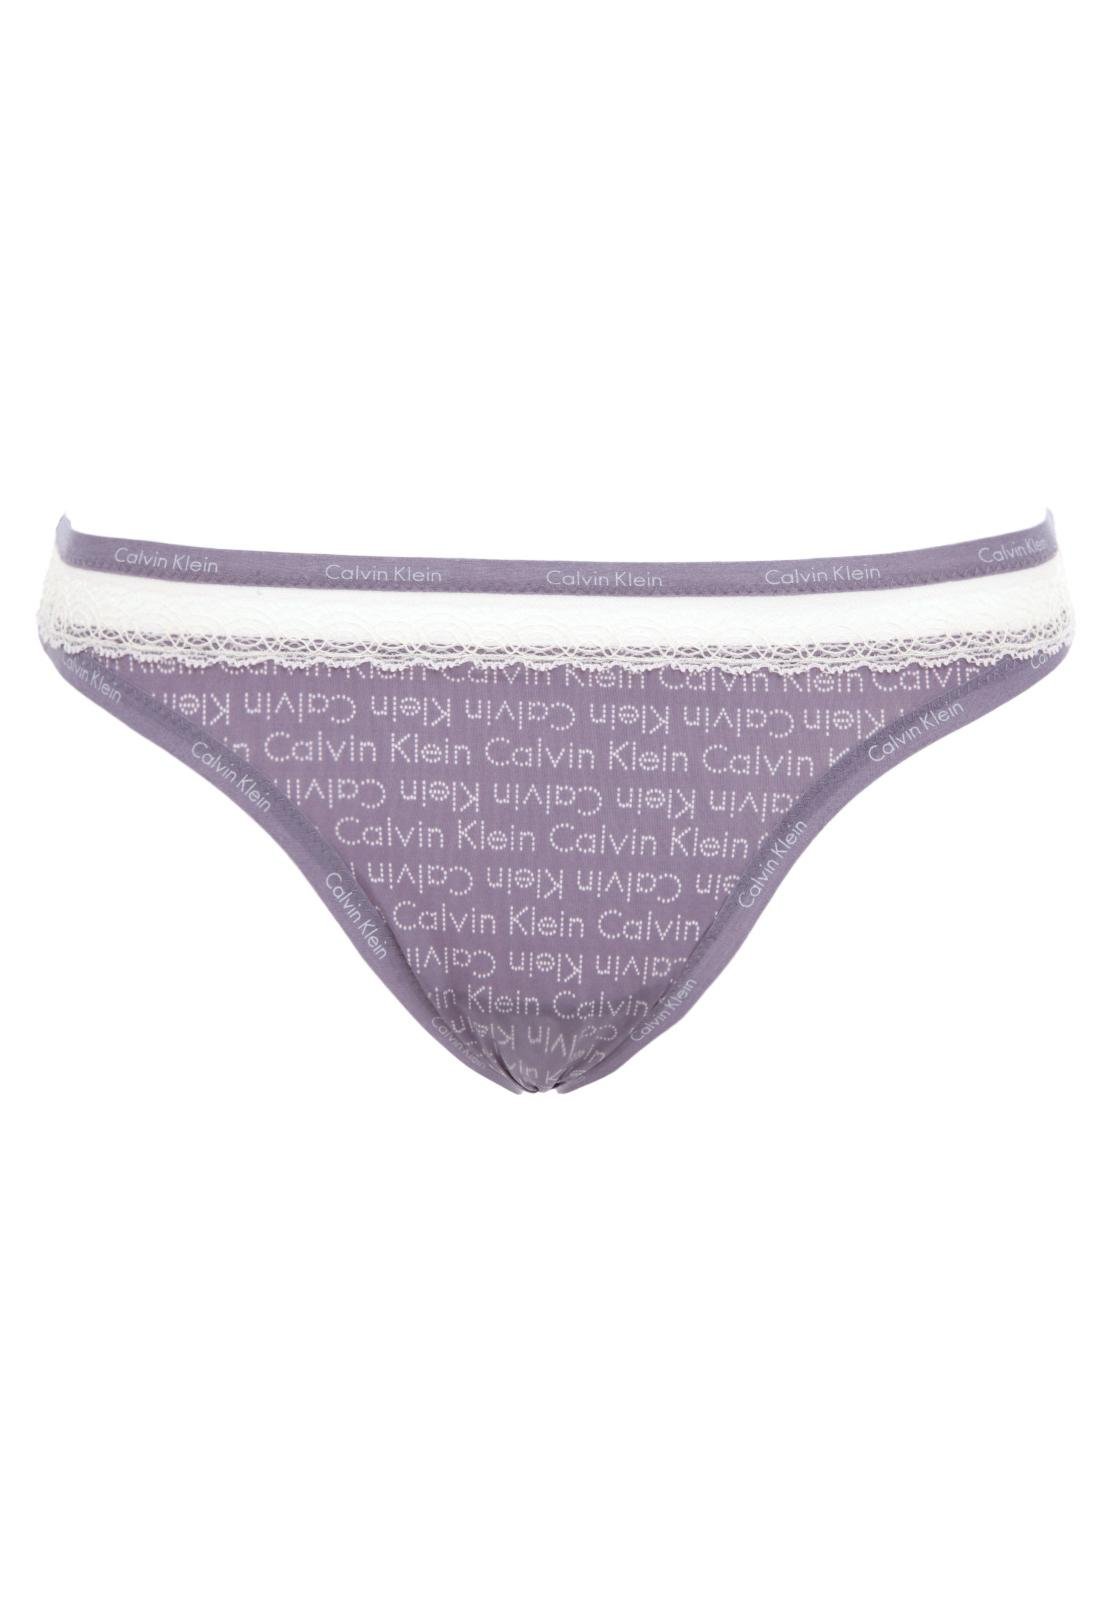 https://static.dafiti.com.br/p/Calvin-Klein-Underwear-Calcinha-Calvin-Klein-Fio-Dental-Perfectly-Fit-Sexy-Signature-Cycle-Logo-Roxa-2428-5920251-3-zoom.jpg